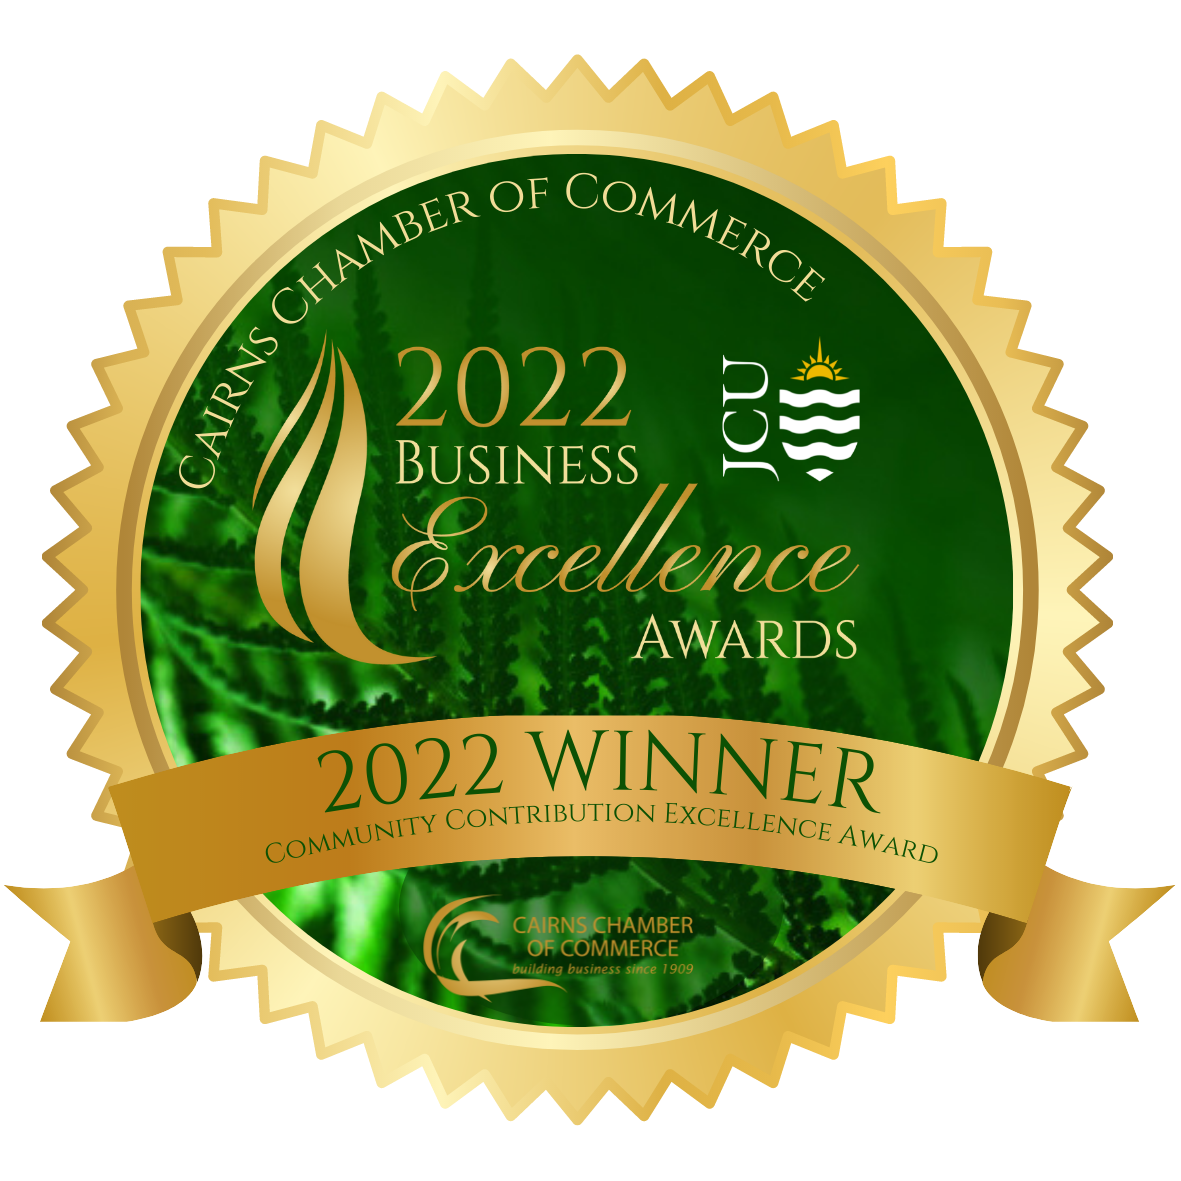 Business excellence awards winner 2022